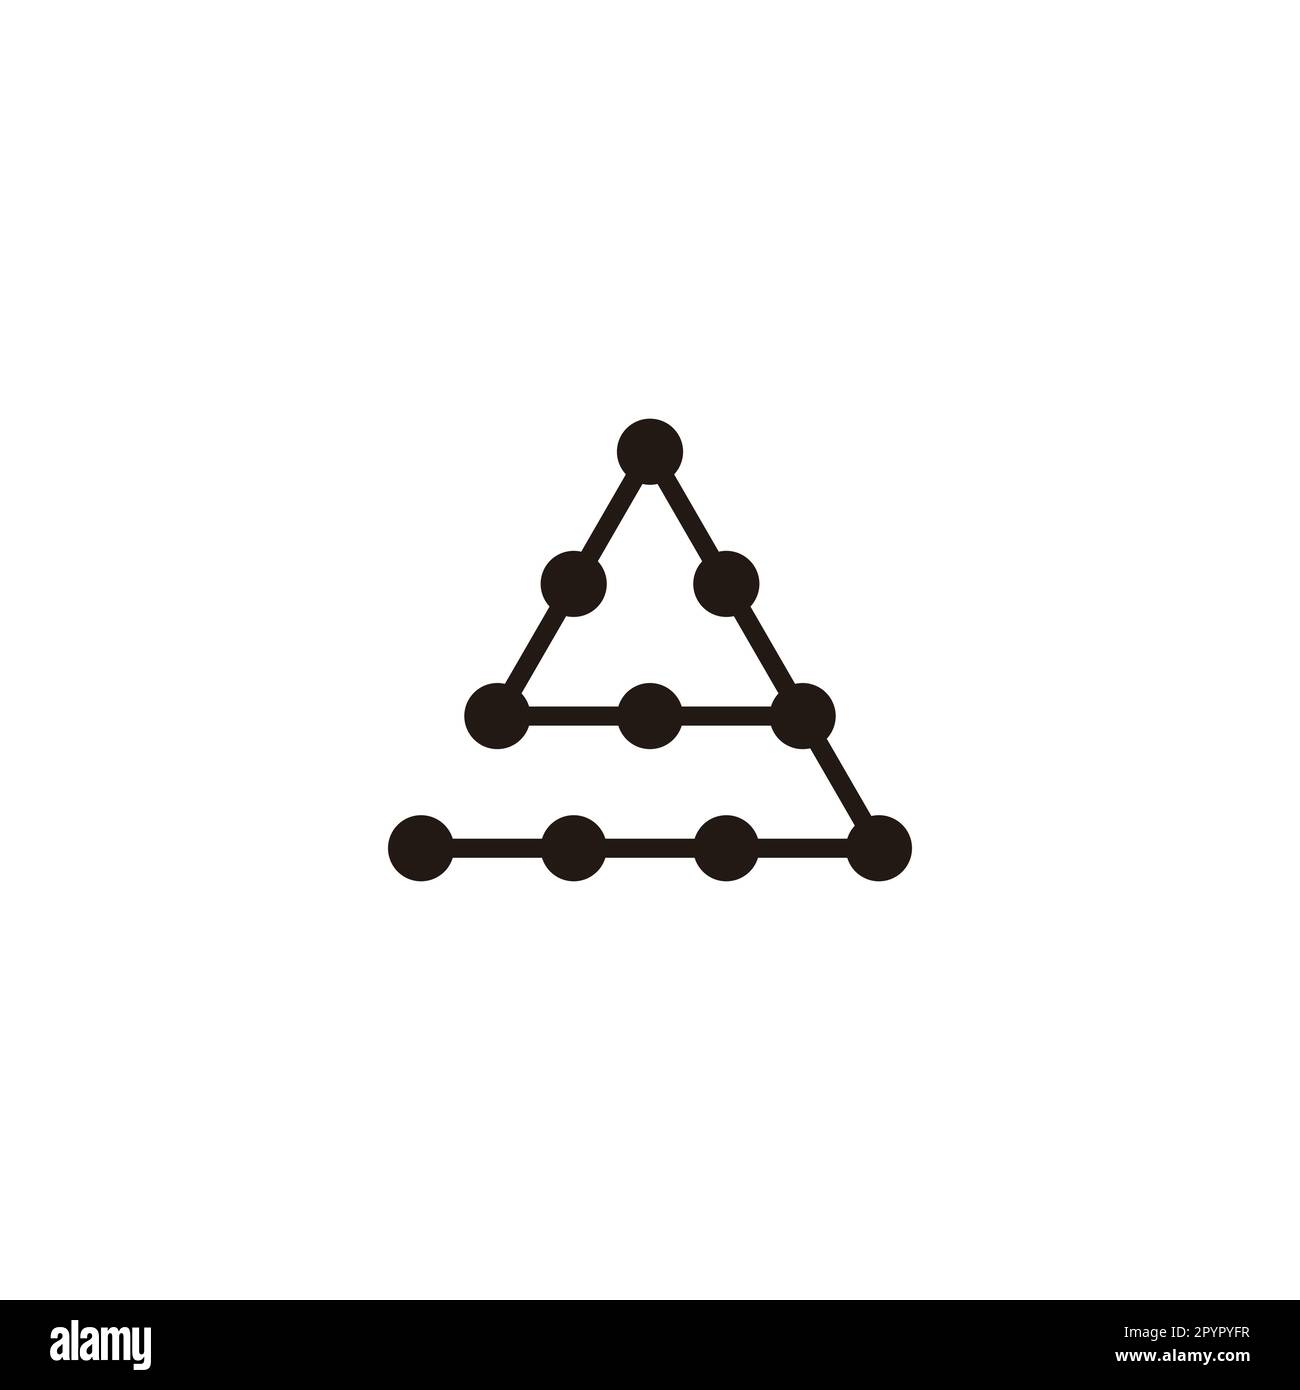 Letter g molecules, triangle geometric symbol simple logo vector Stock Vector